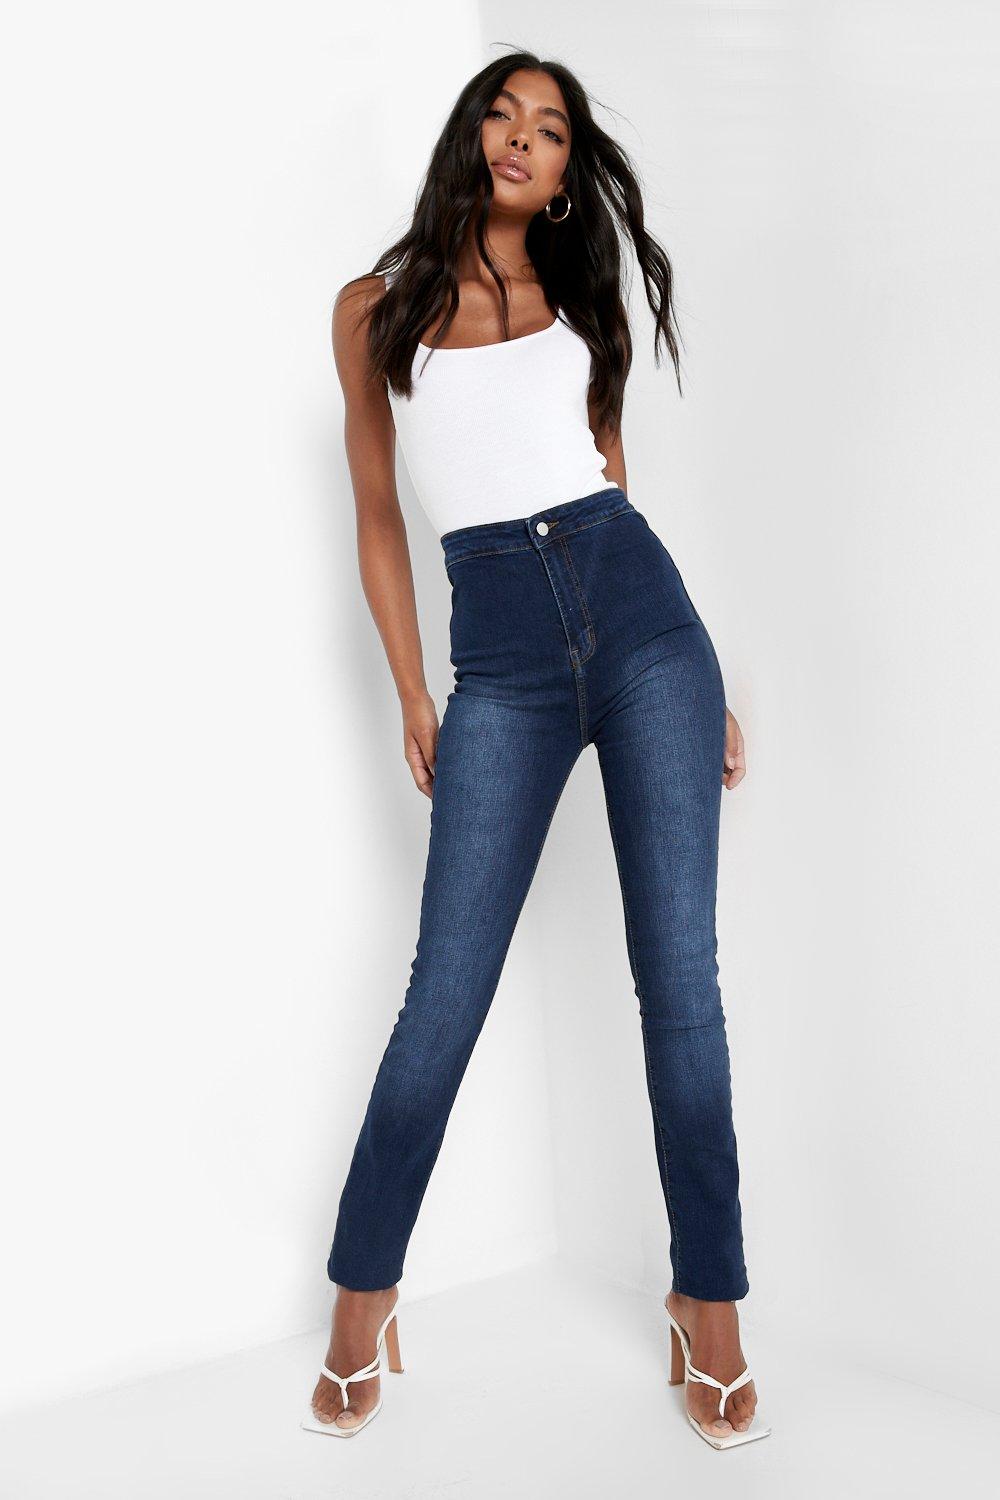 38 waist jeans